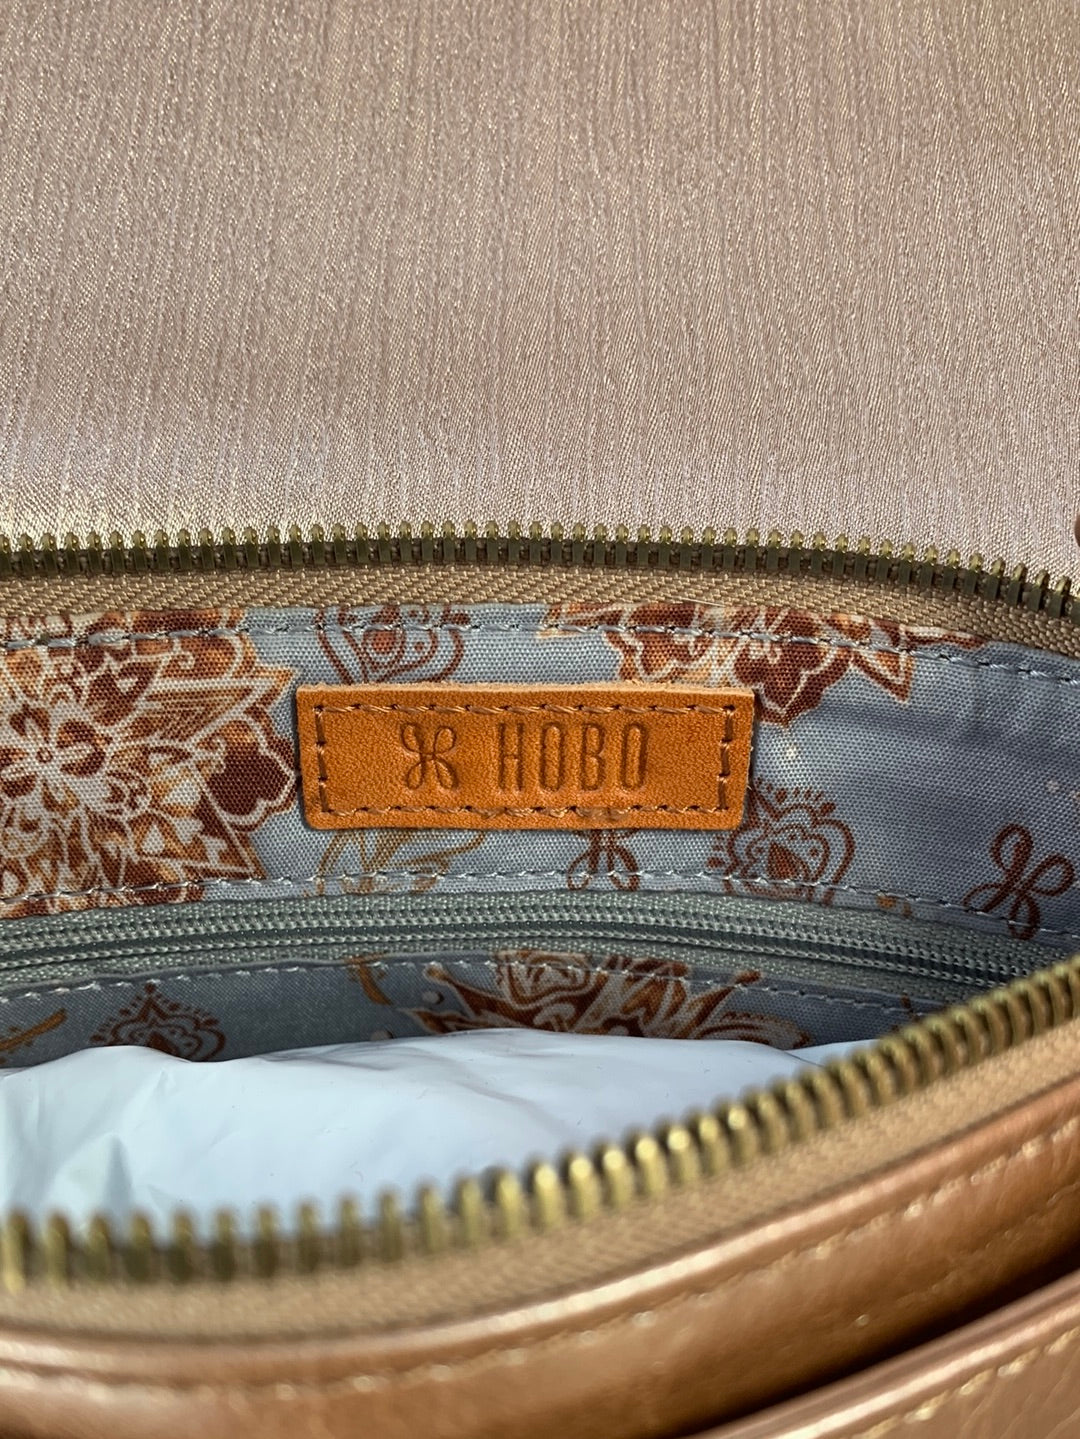 NWT - HOBO metallic rose gold Leather Cadence Convertible Crossbody Bag